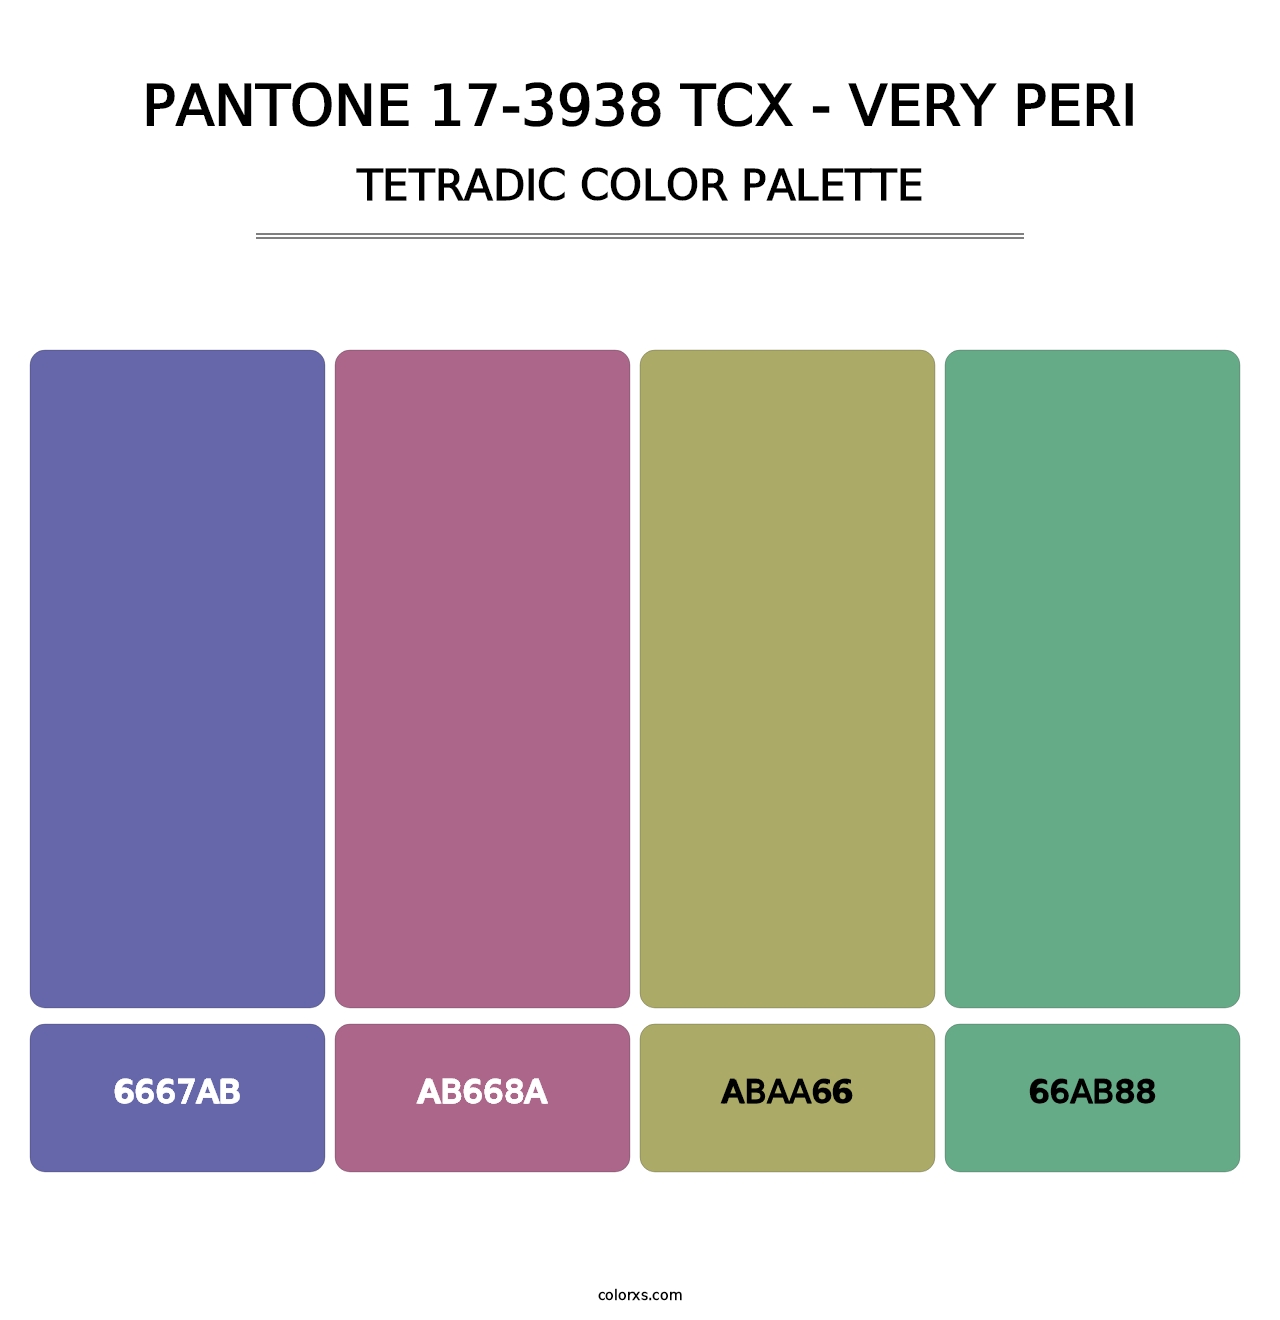 PANTONE 17-3938 TCX - Very Peri - Tetradic Color Palette